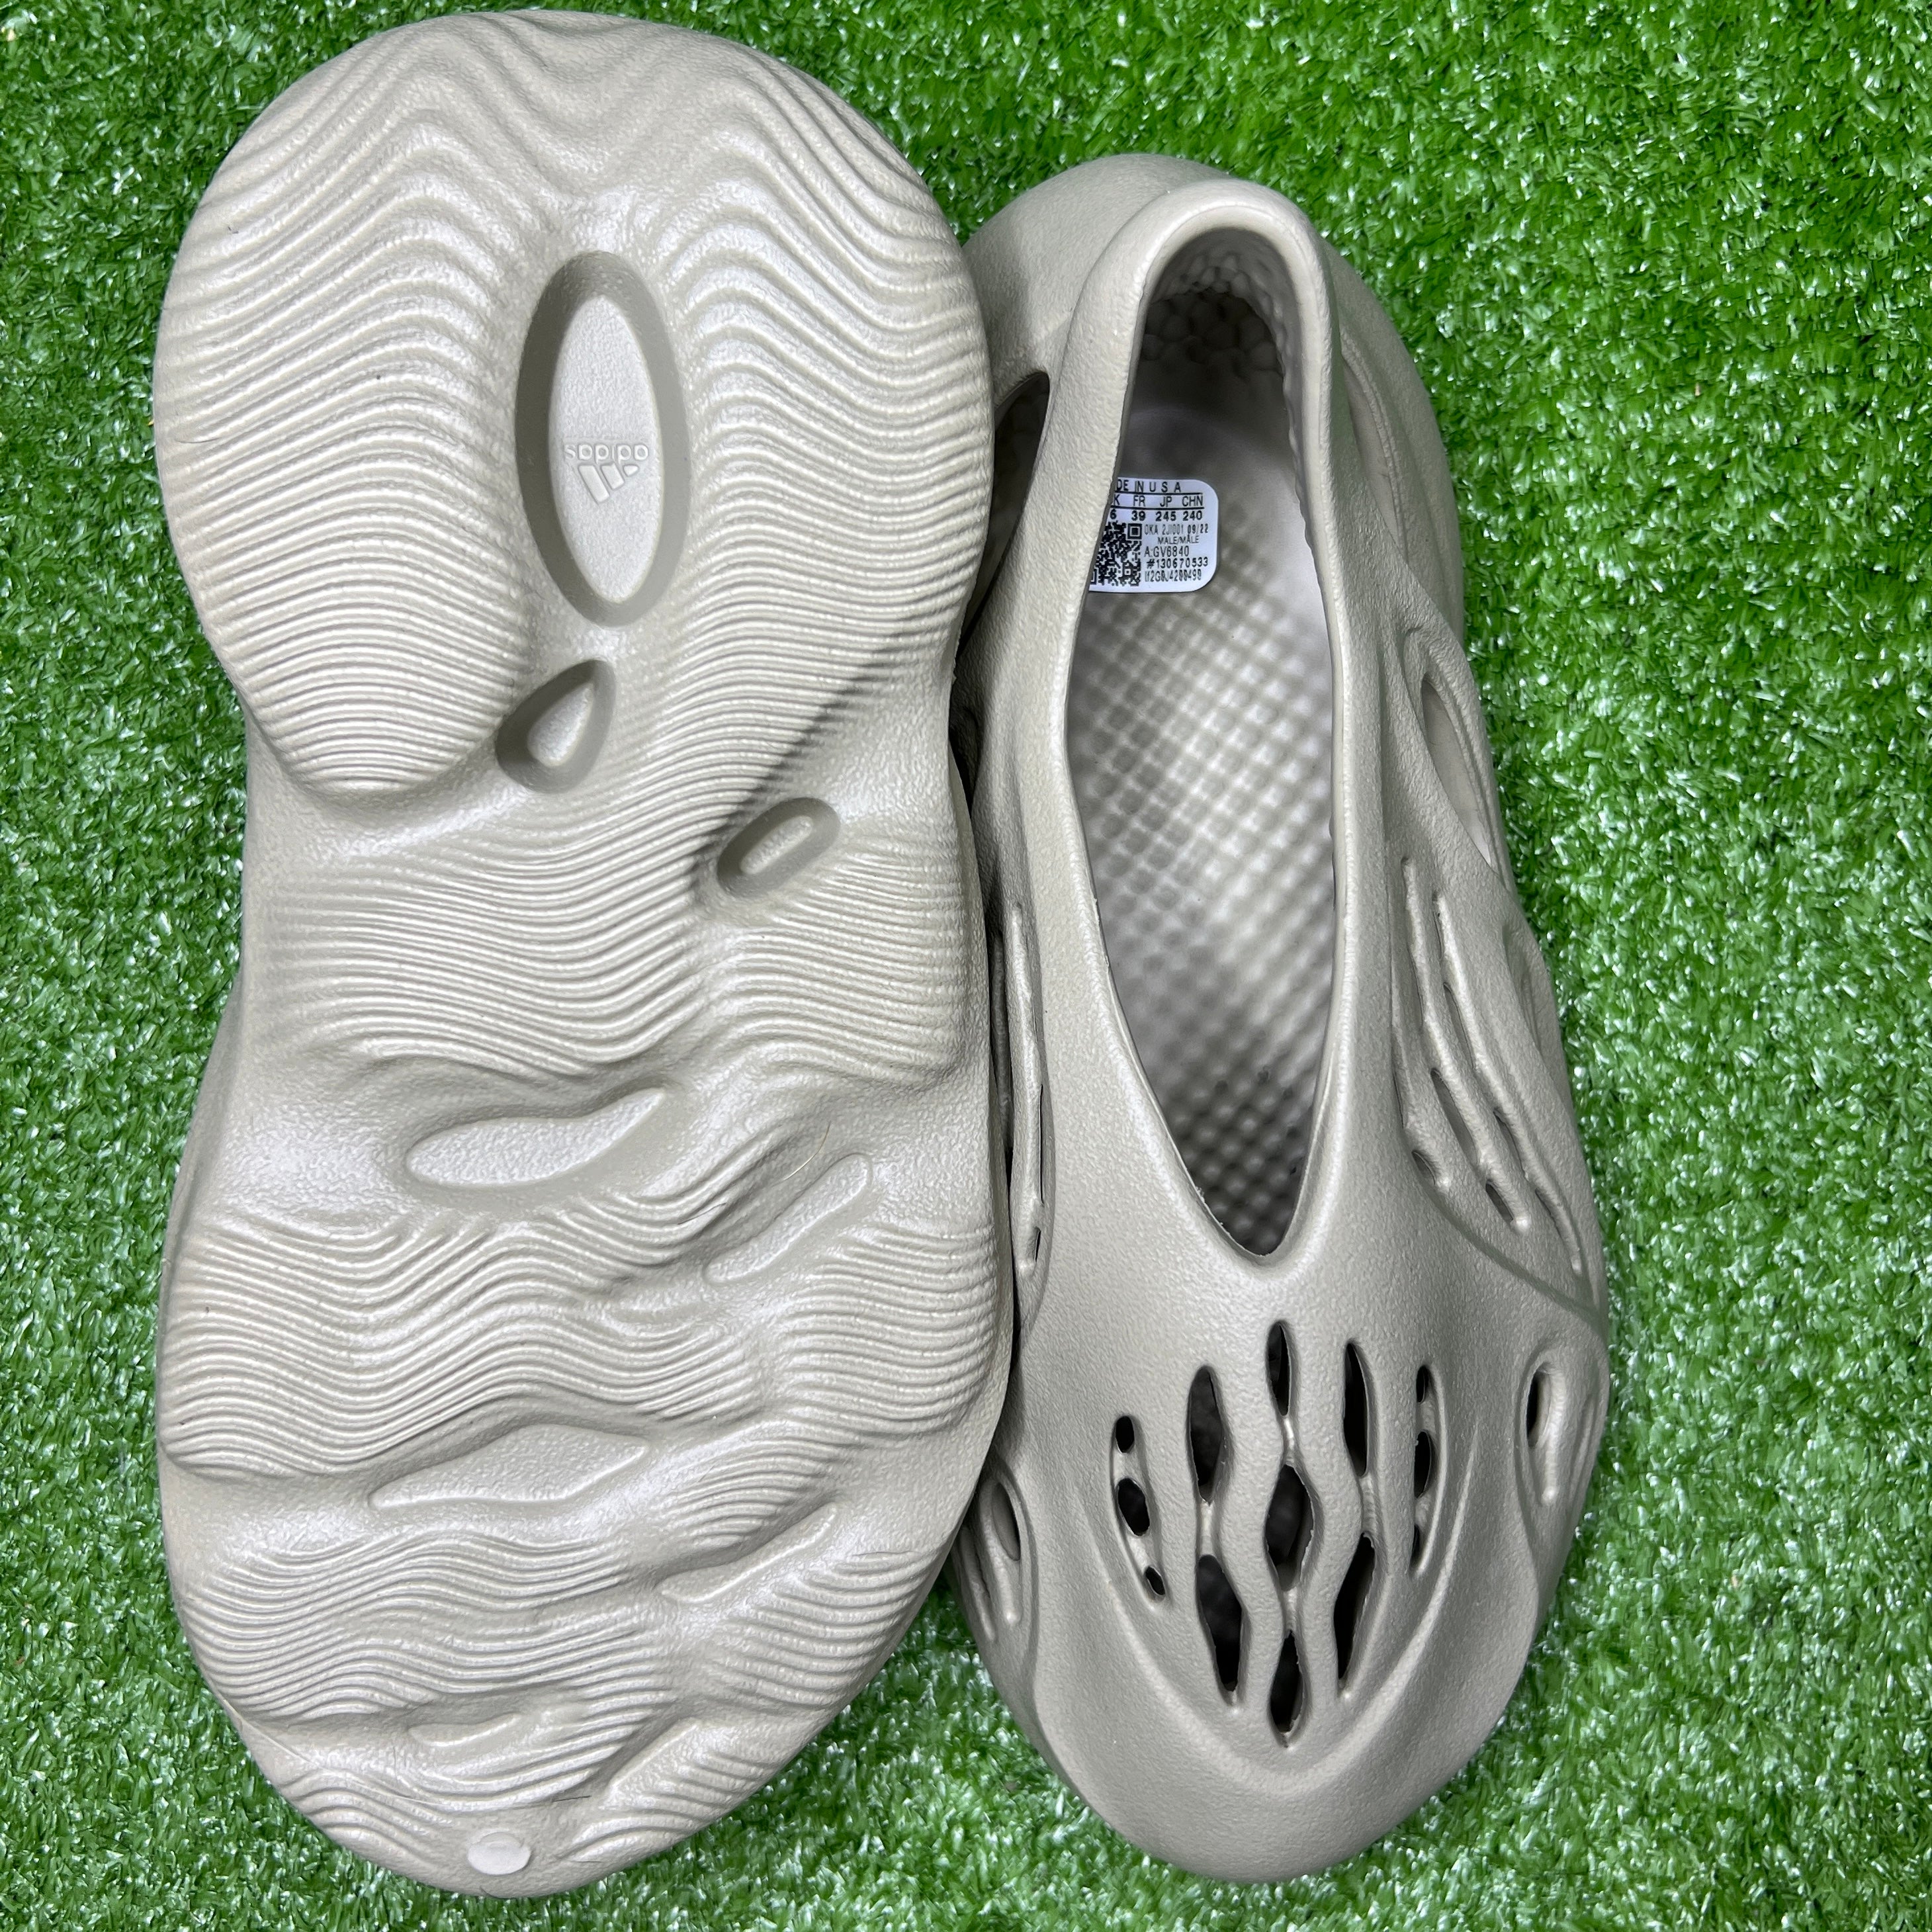 adidas Yeezy Foam Runner “Stone Salt”